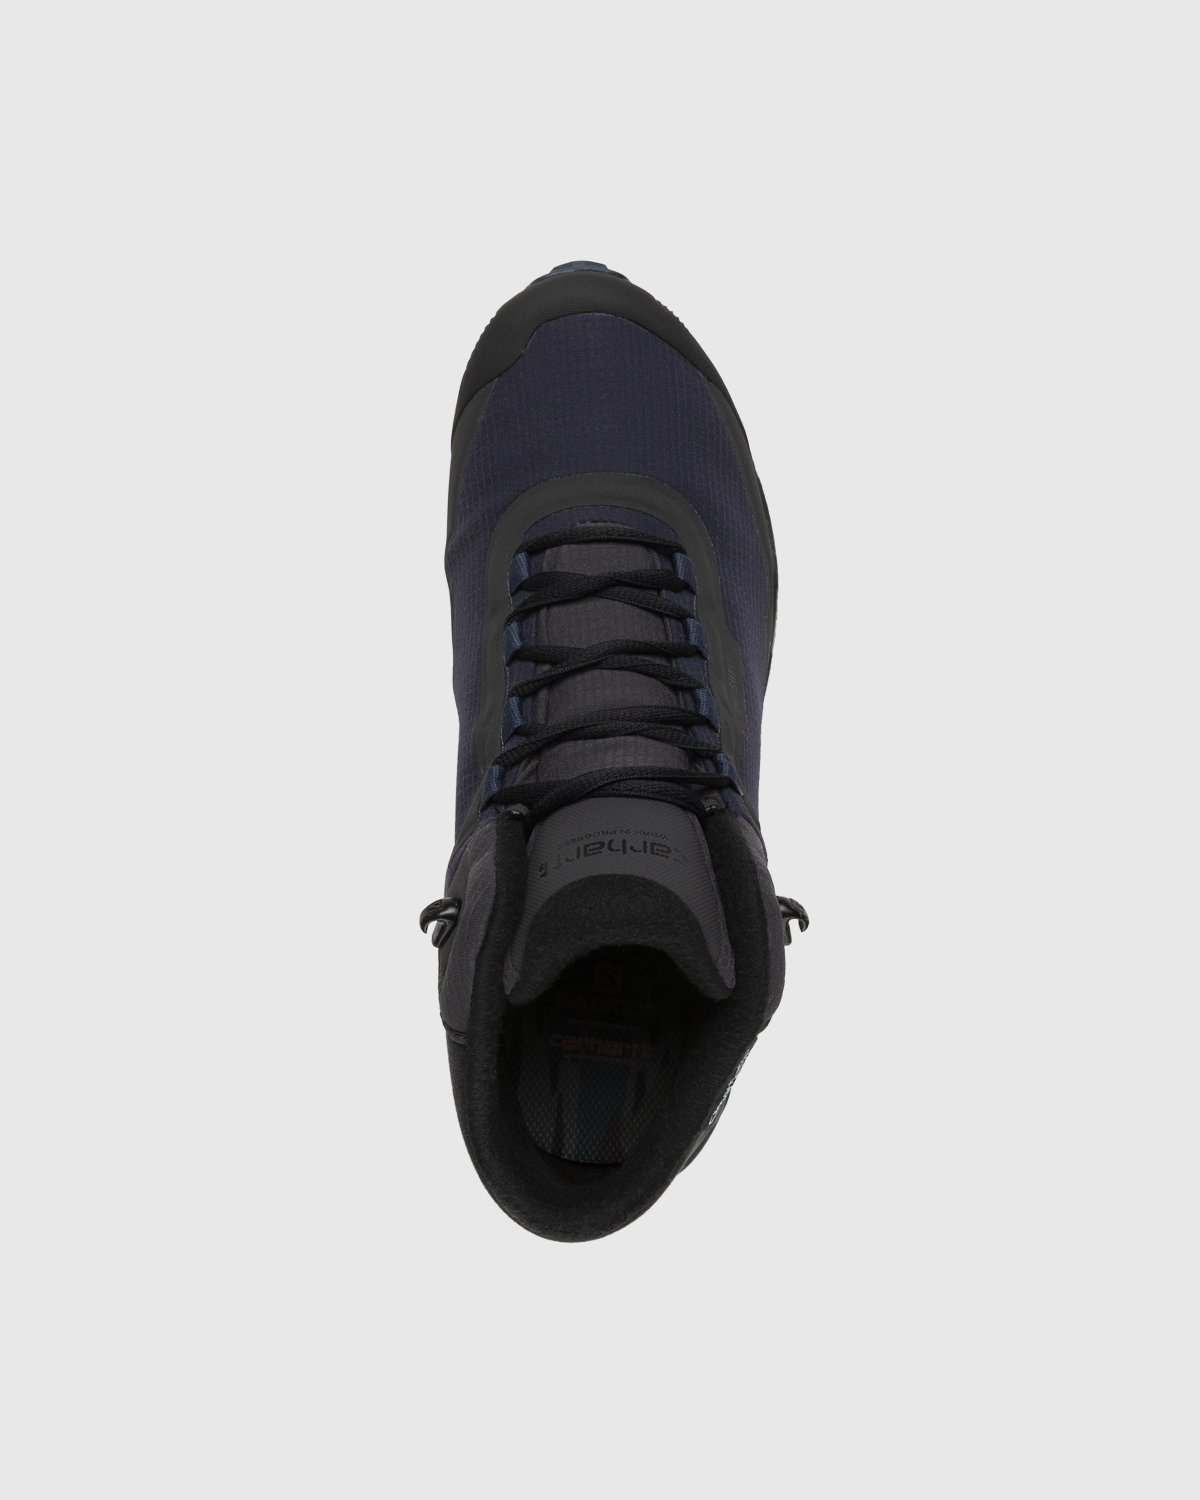 Carhartt WIP x Salomon - Shelter CSWP Black - Footwear - Black - Image 5